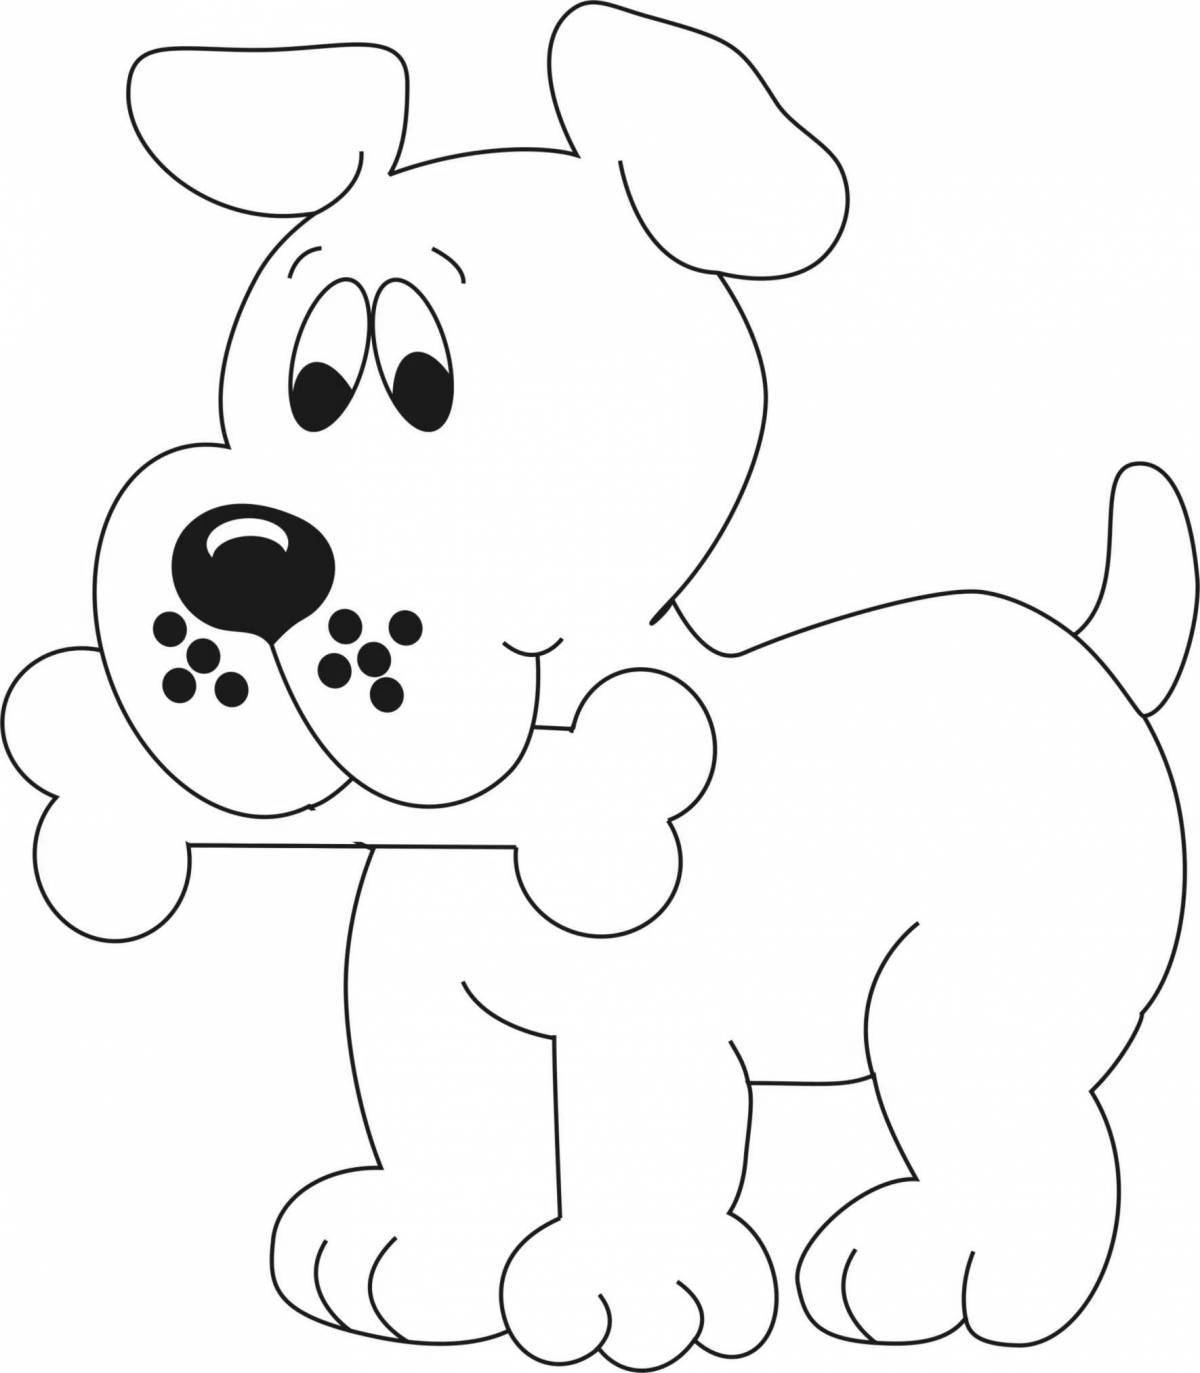 Snuggly coloring page dog для детей